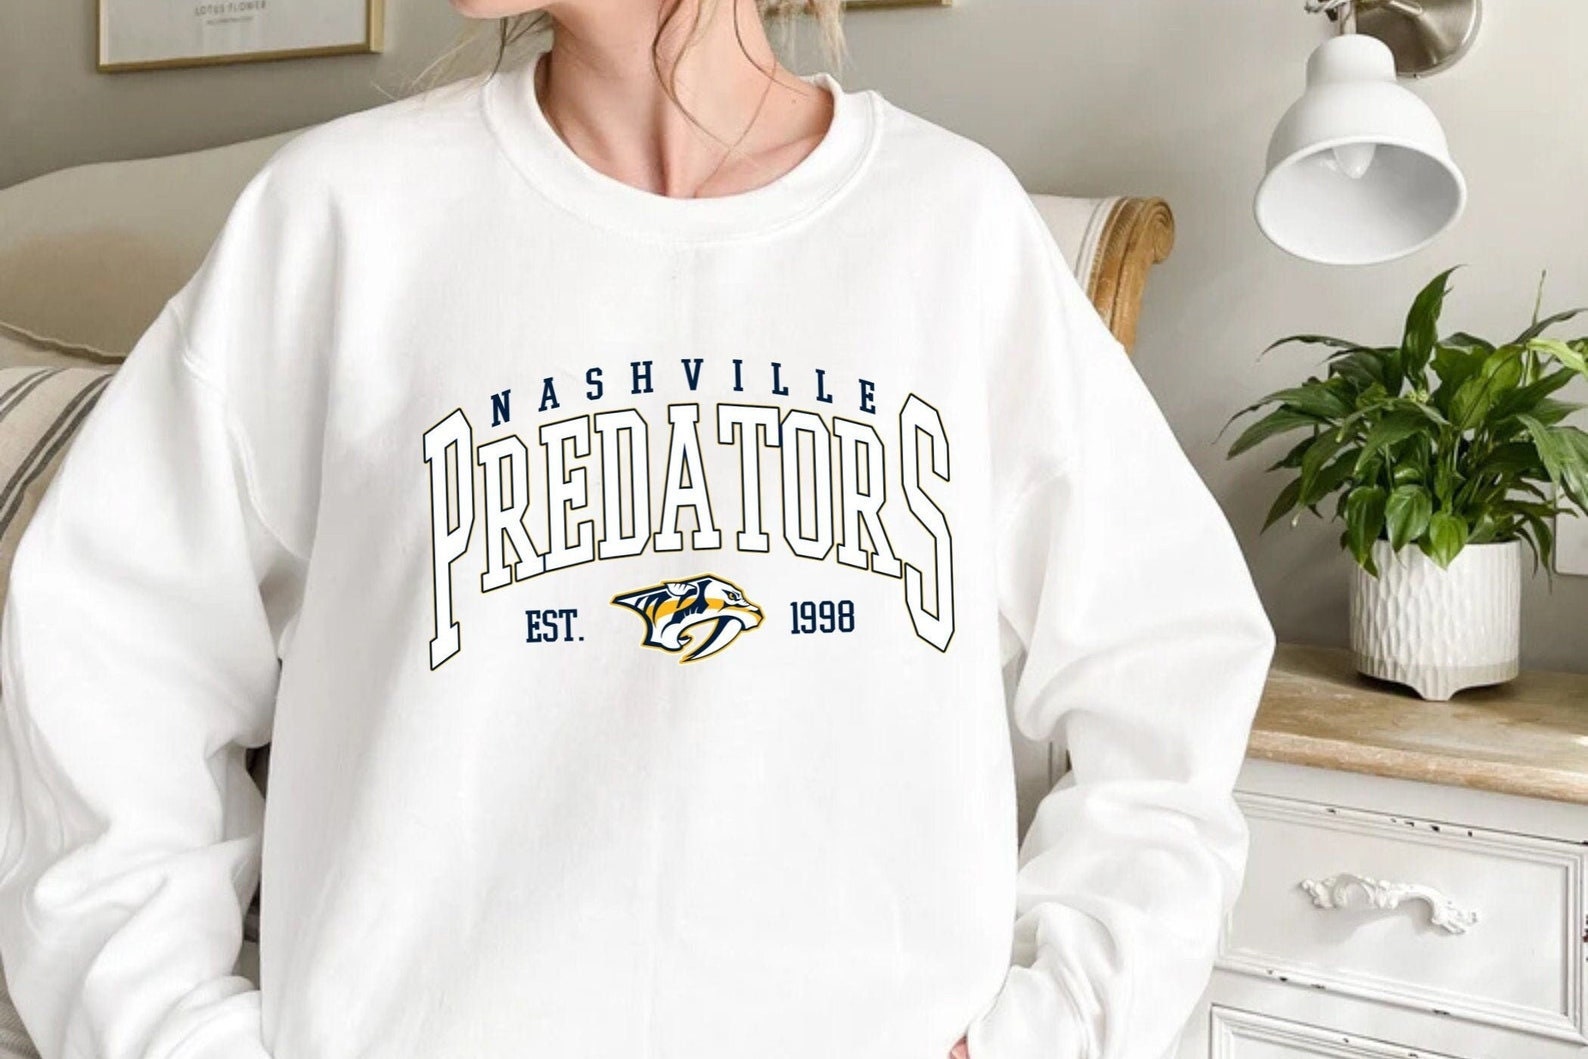 NHL Nashville Predators Girls' Long Sleeve Poly Fleece Hooded Sweatshirt -  XS